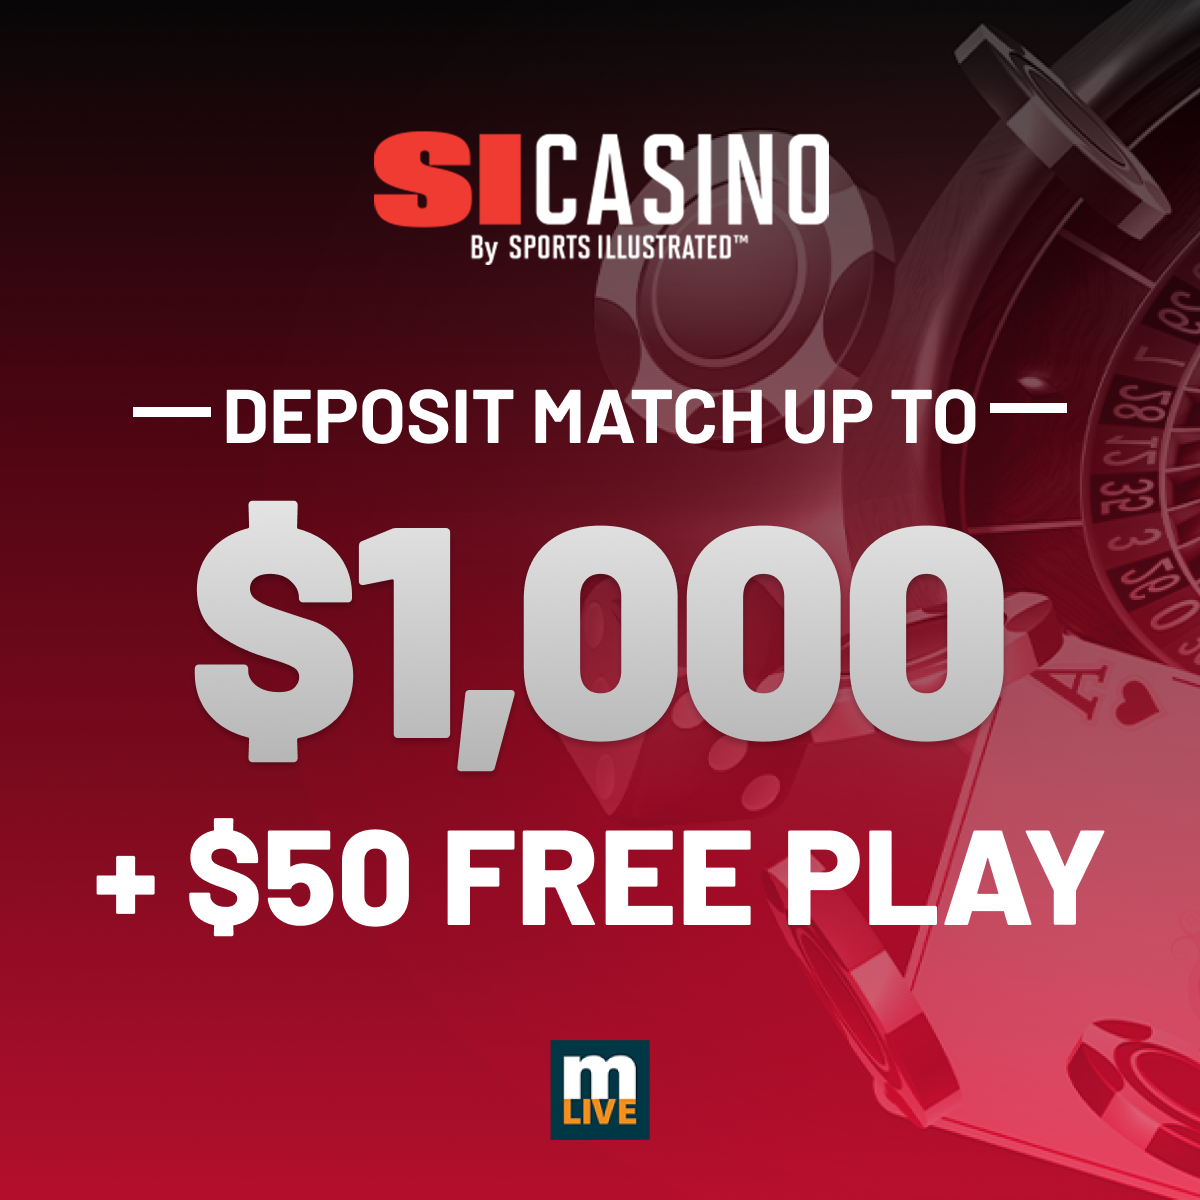 SI Casino bonus Up to $1,000 deposit match + $50 free play